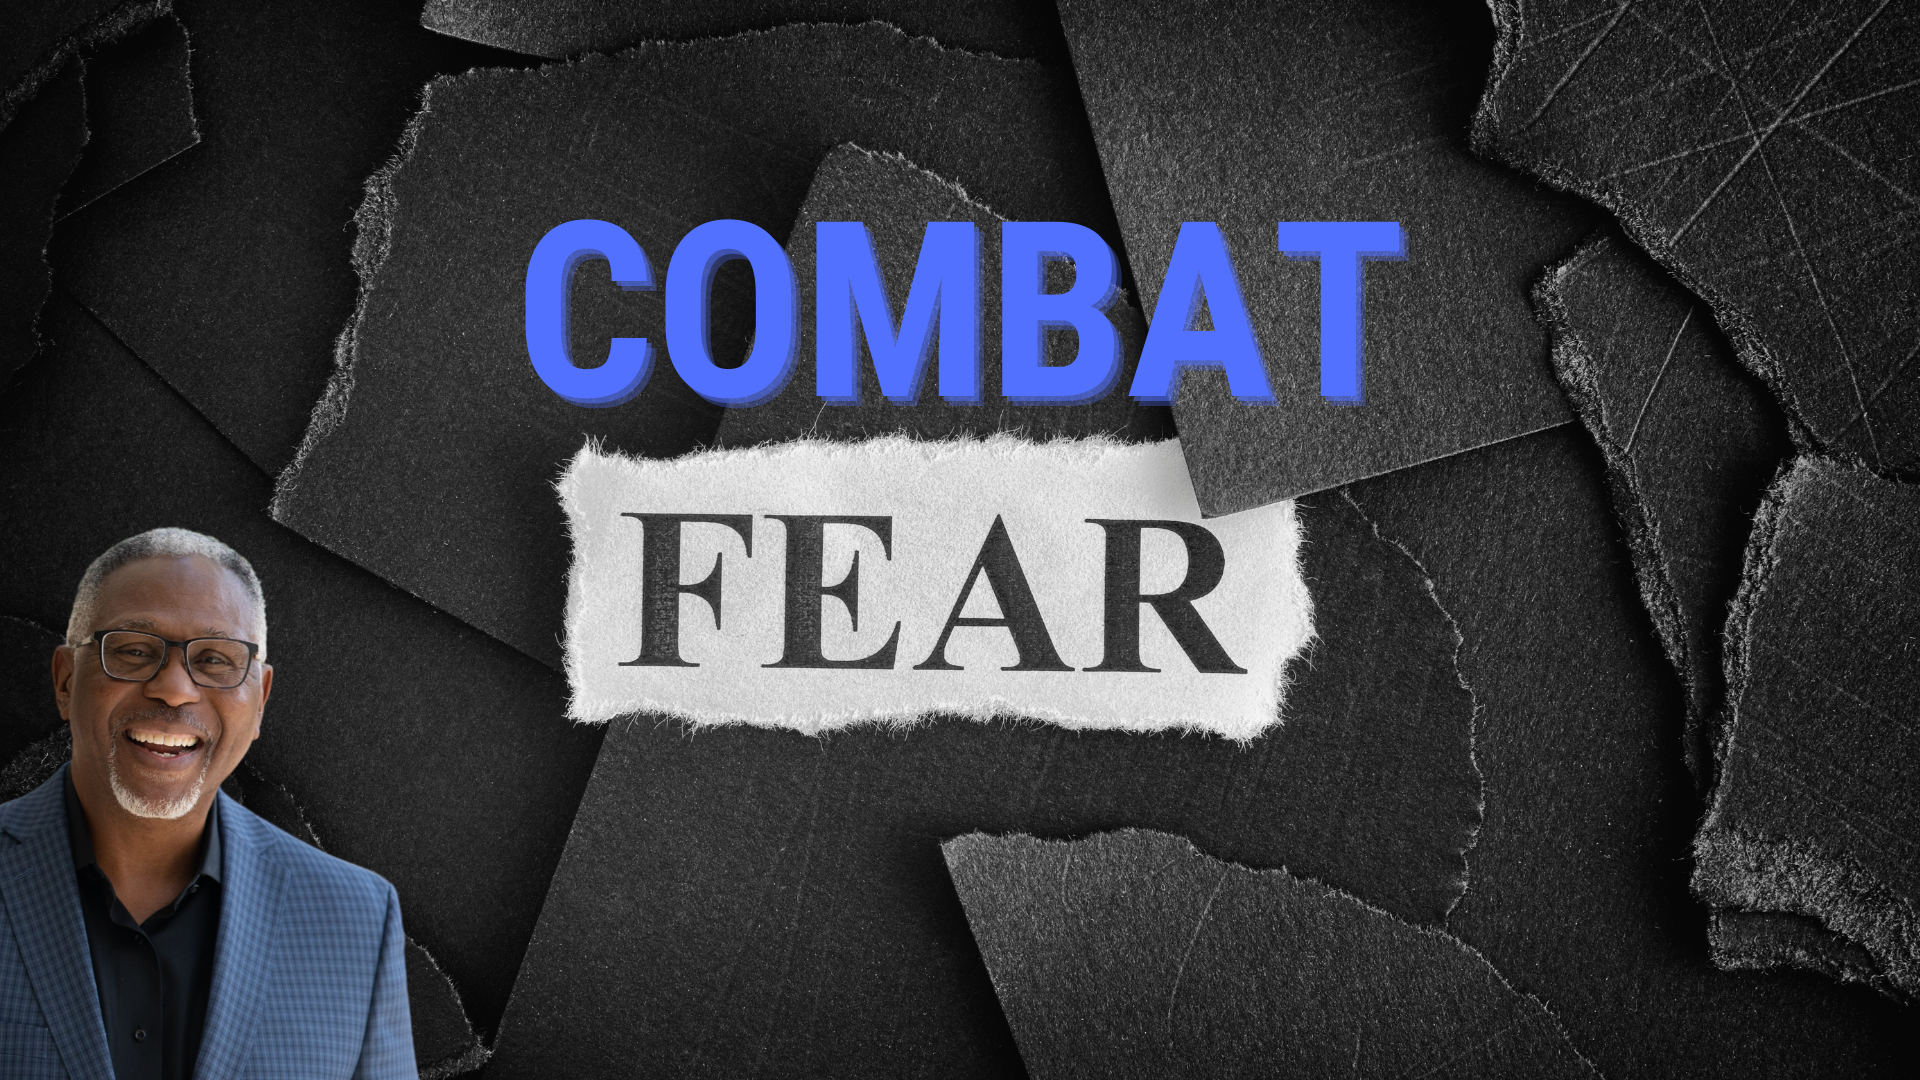 Combat Fear head image